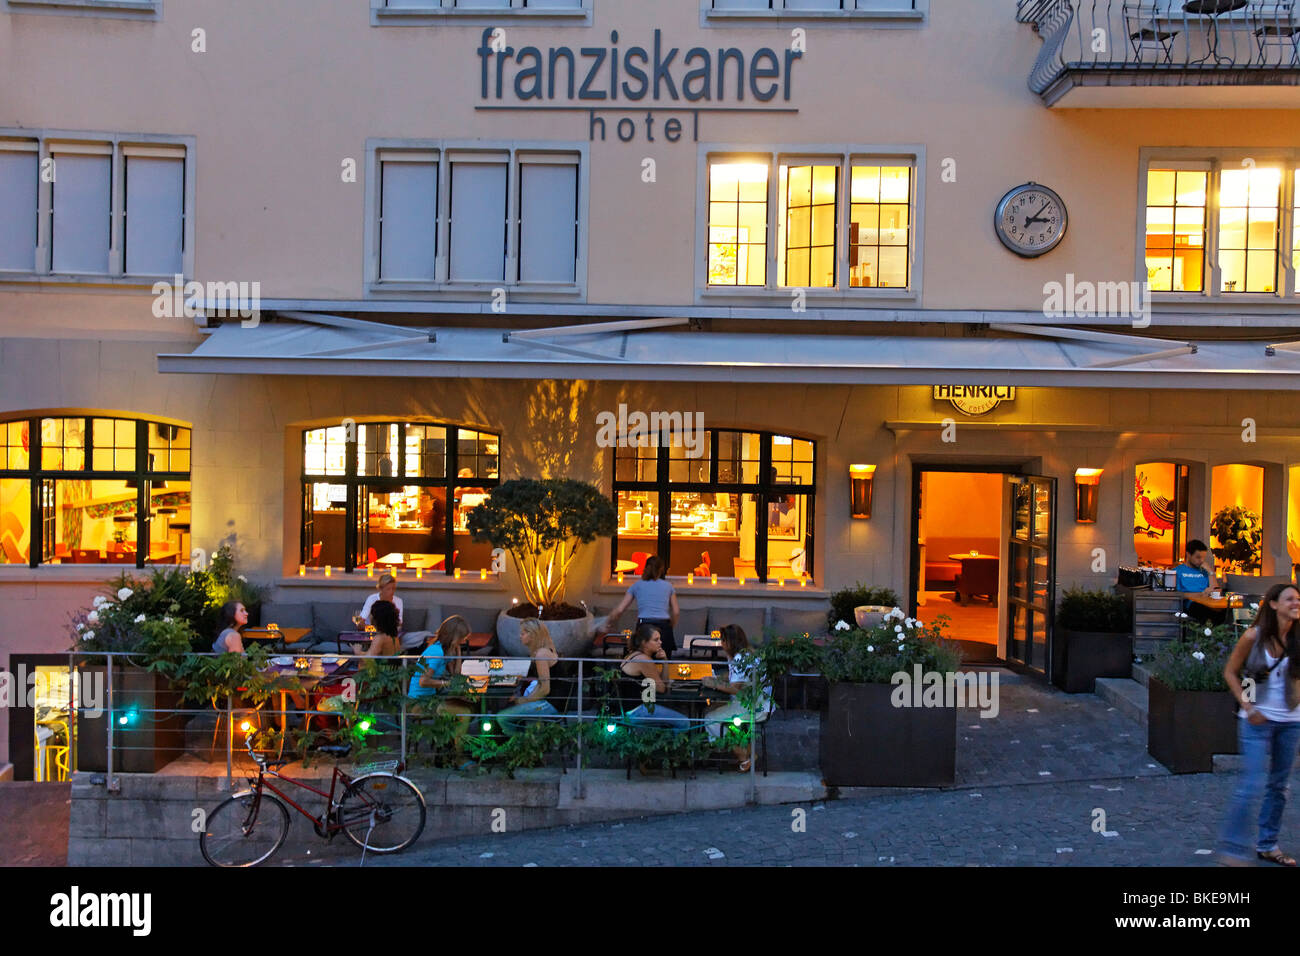 Franziskaner Hotel outdoor in Niederdorf, people, restaurants in summer, Switzerland, Zurich, Stock Photo